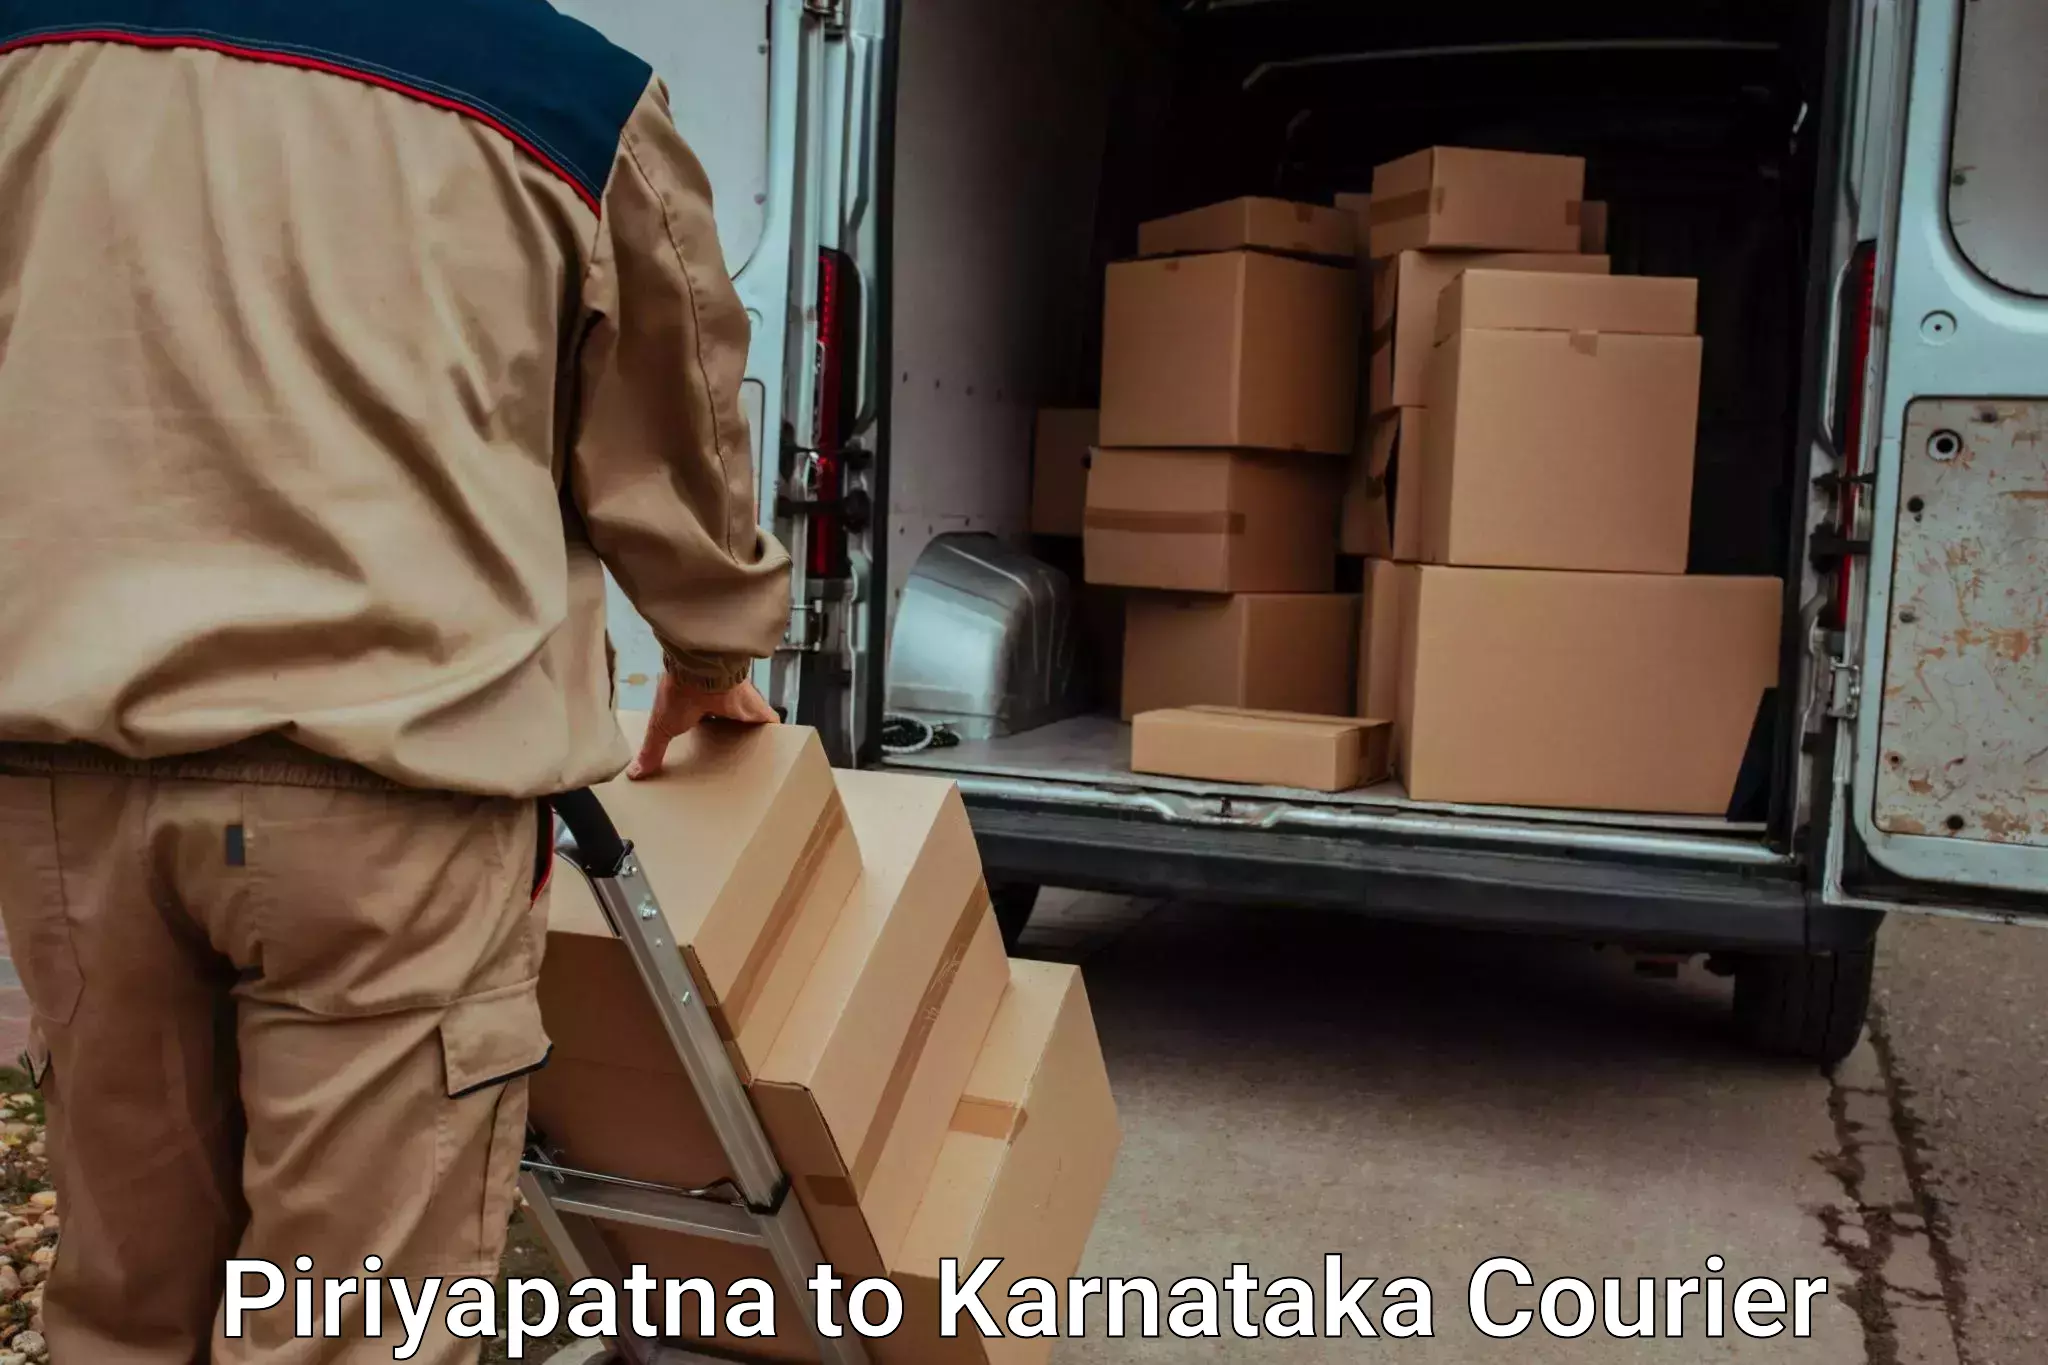 Luggage dispatch service Piriyapatna to Hoovina Hadagali